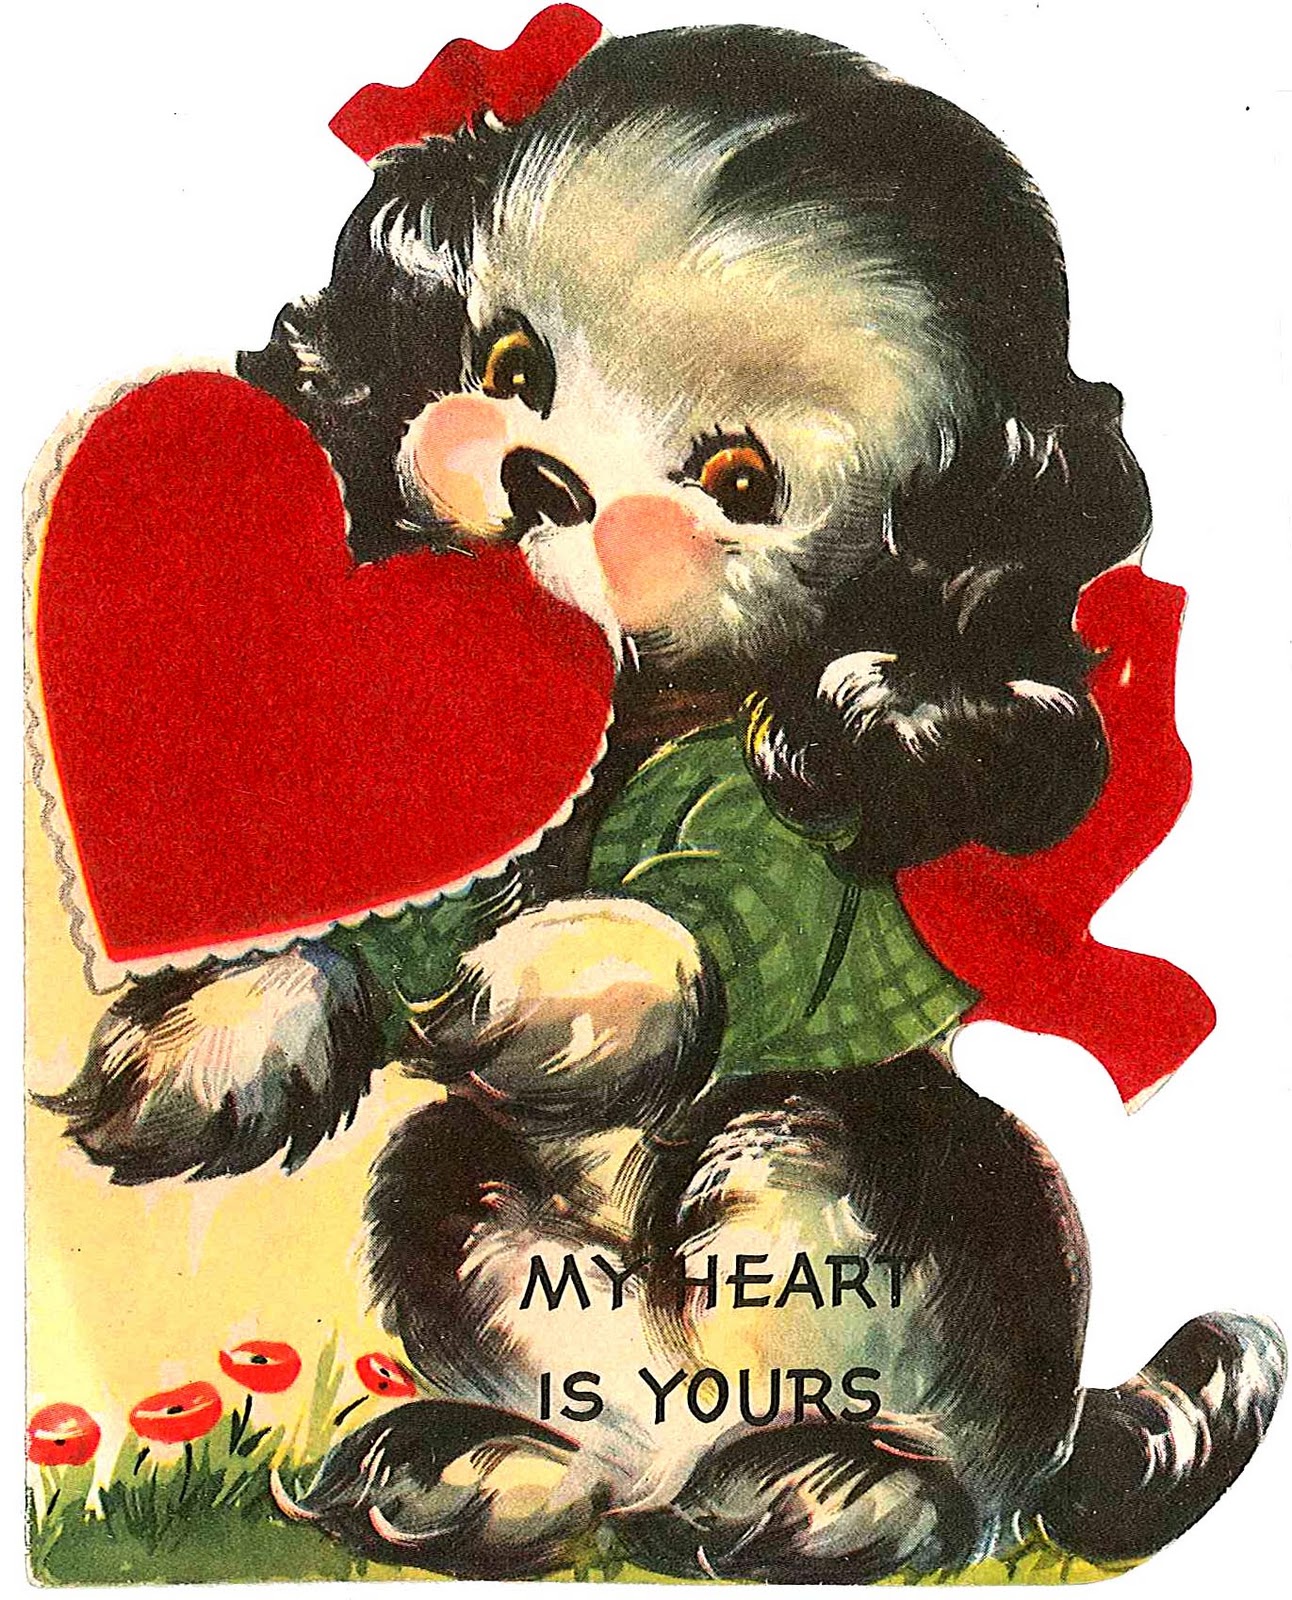 Very Merry Vintage Syle: Vintage Valentine Card Images & Decor